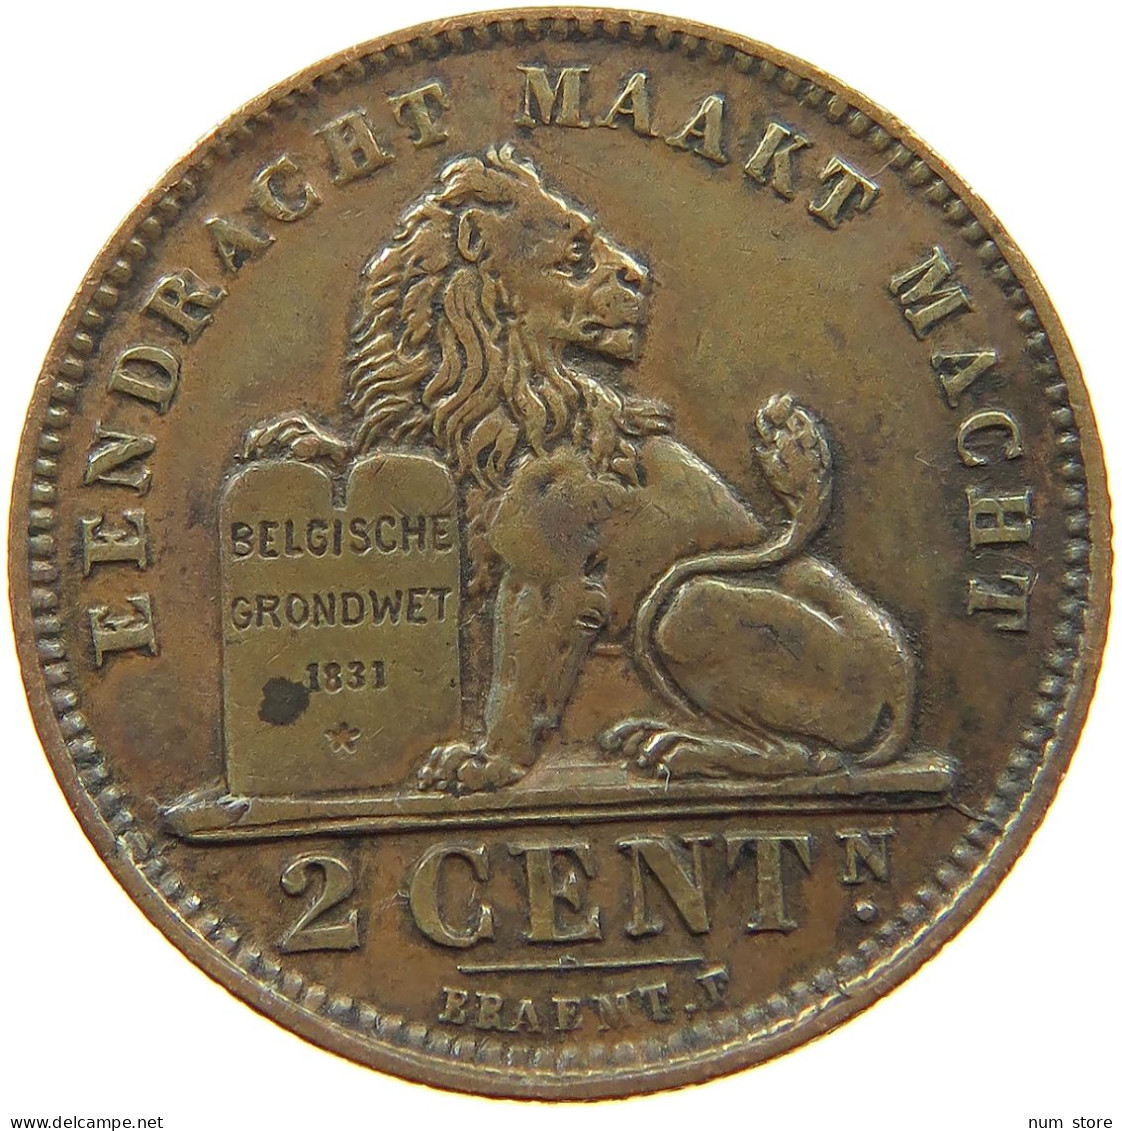 BELGIUM 2 CENTIMES 1911 #a012 0331 - 2 Centimes